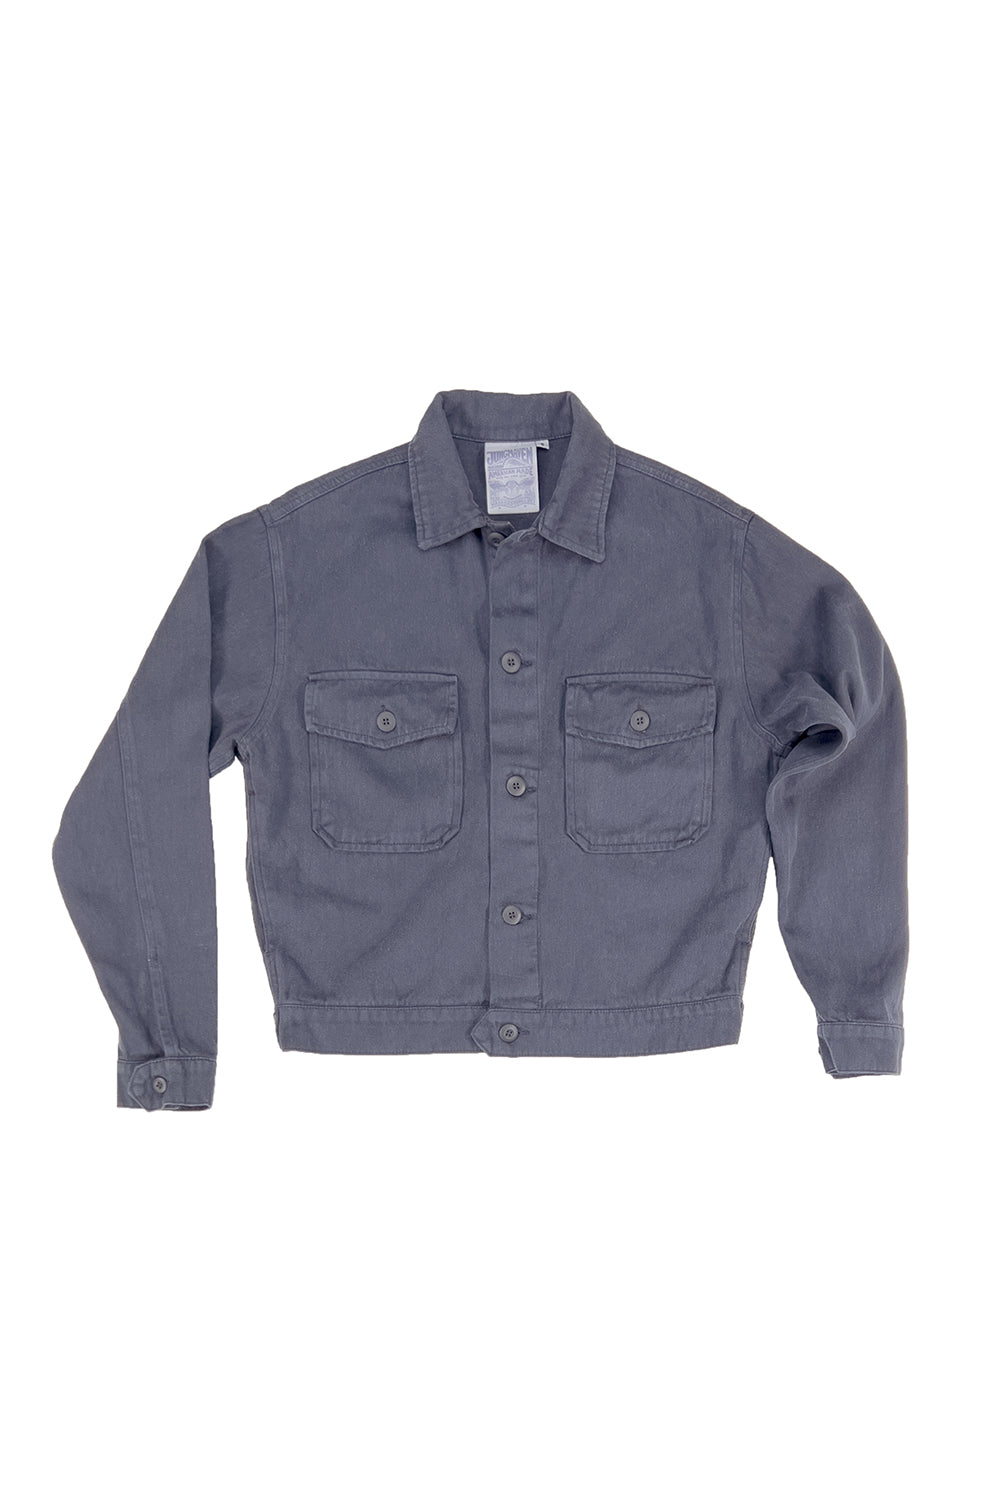 Mechanic Jacket | Jungmaven Hemp Clothing & Accessories / Color: Diesel Gray